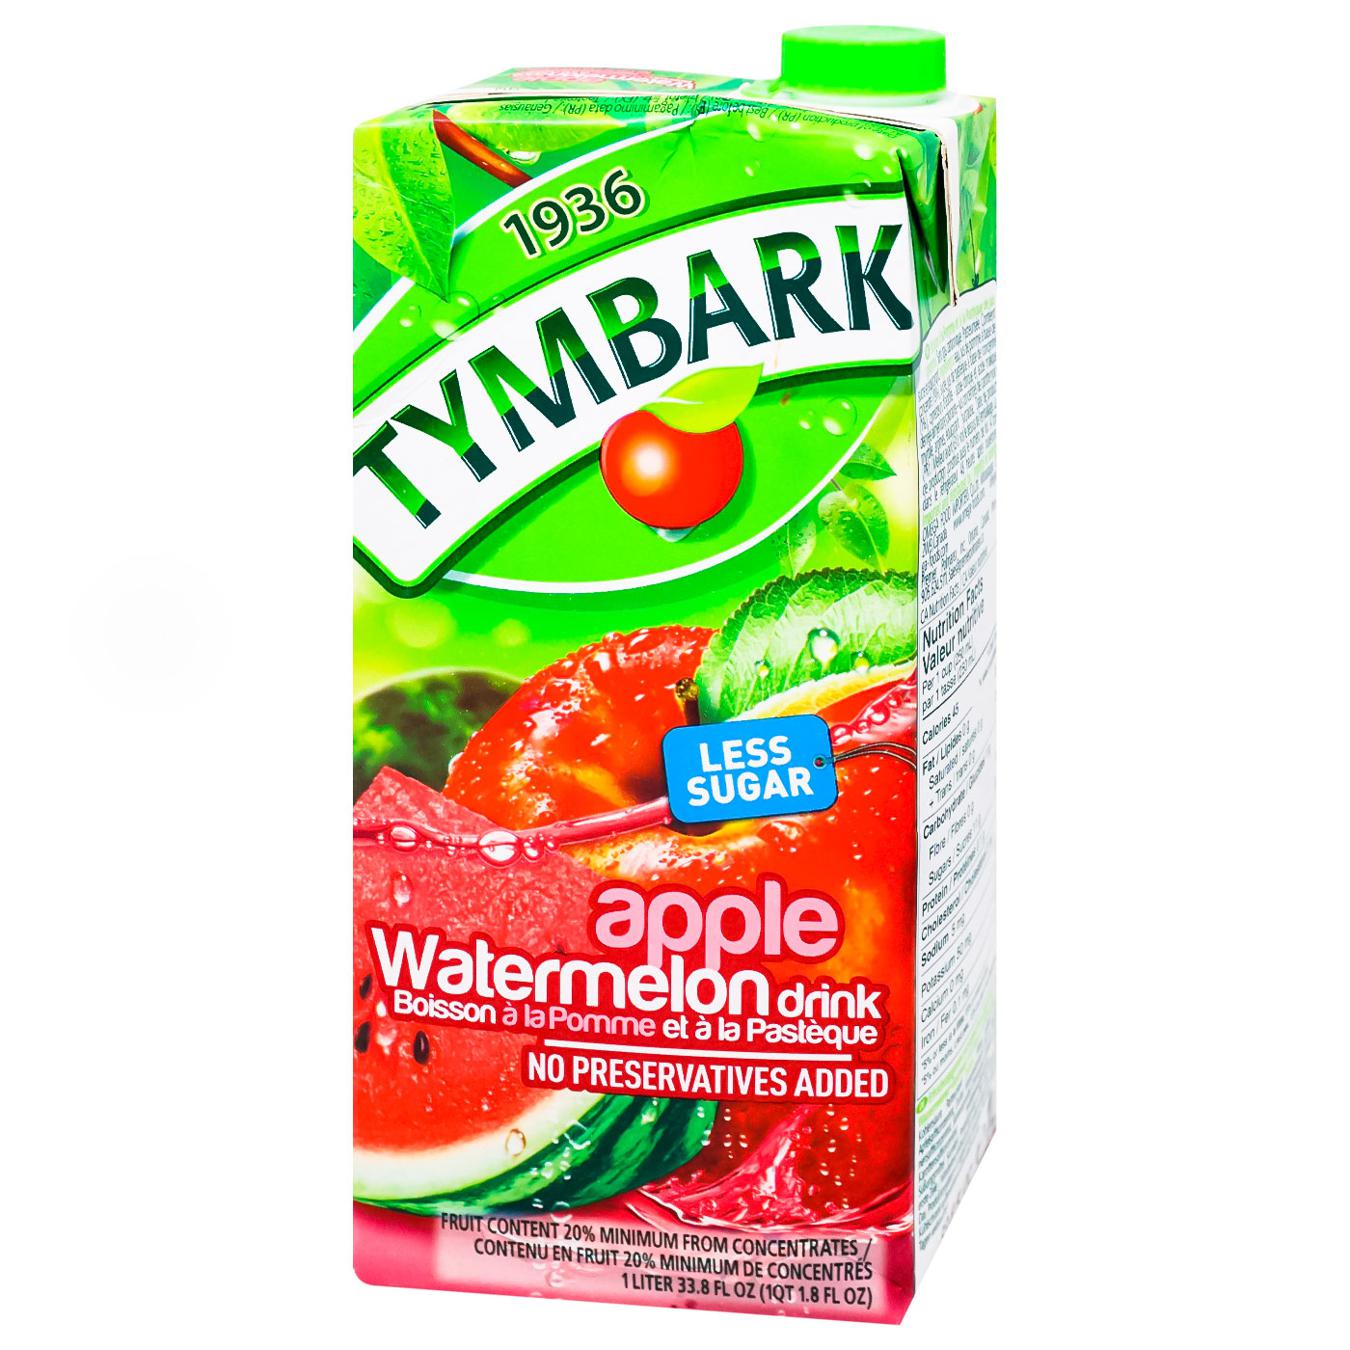 Drink Tymbark apple, watermelon 1l